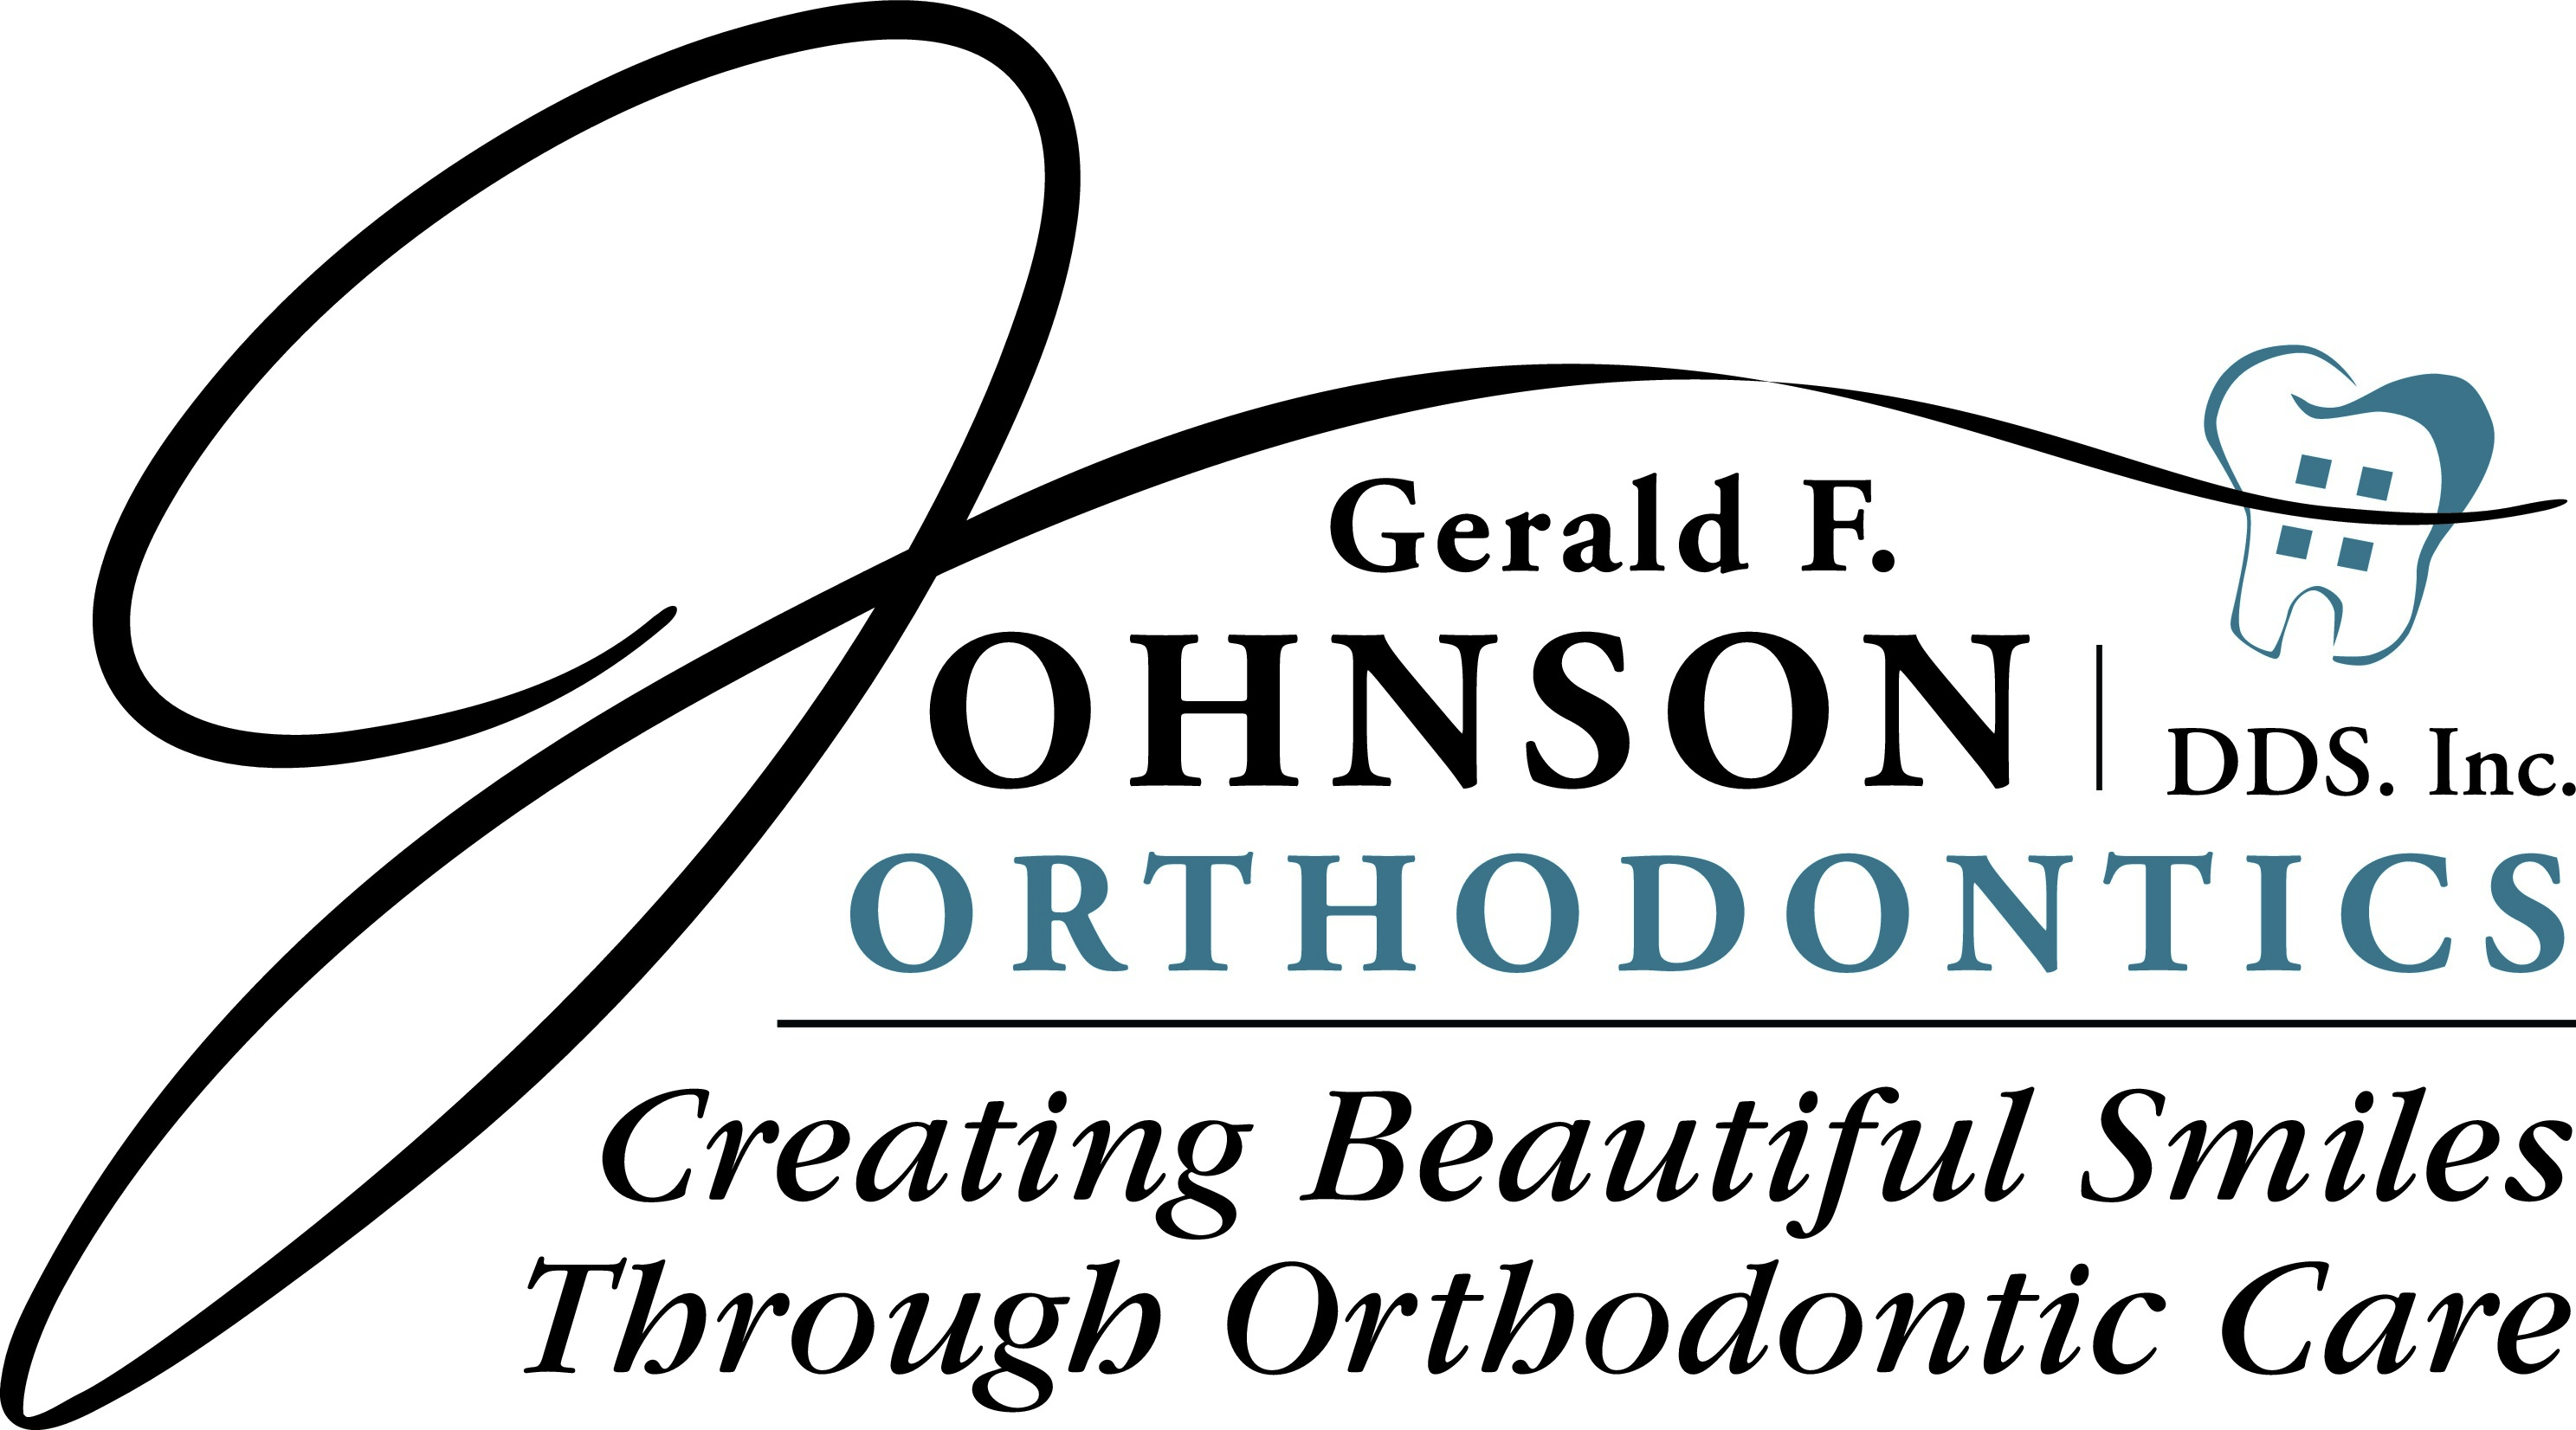 Johnson Orthodontics